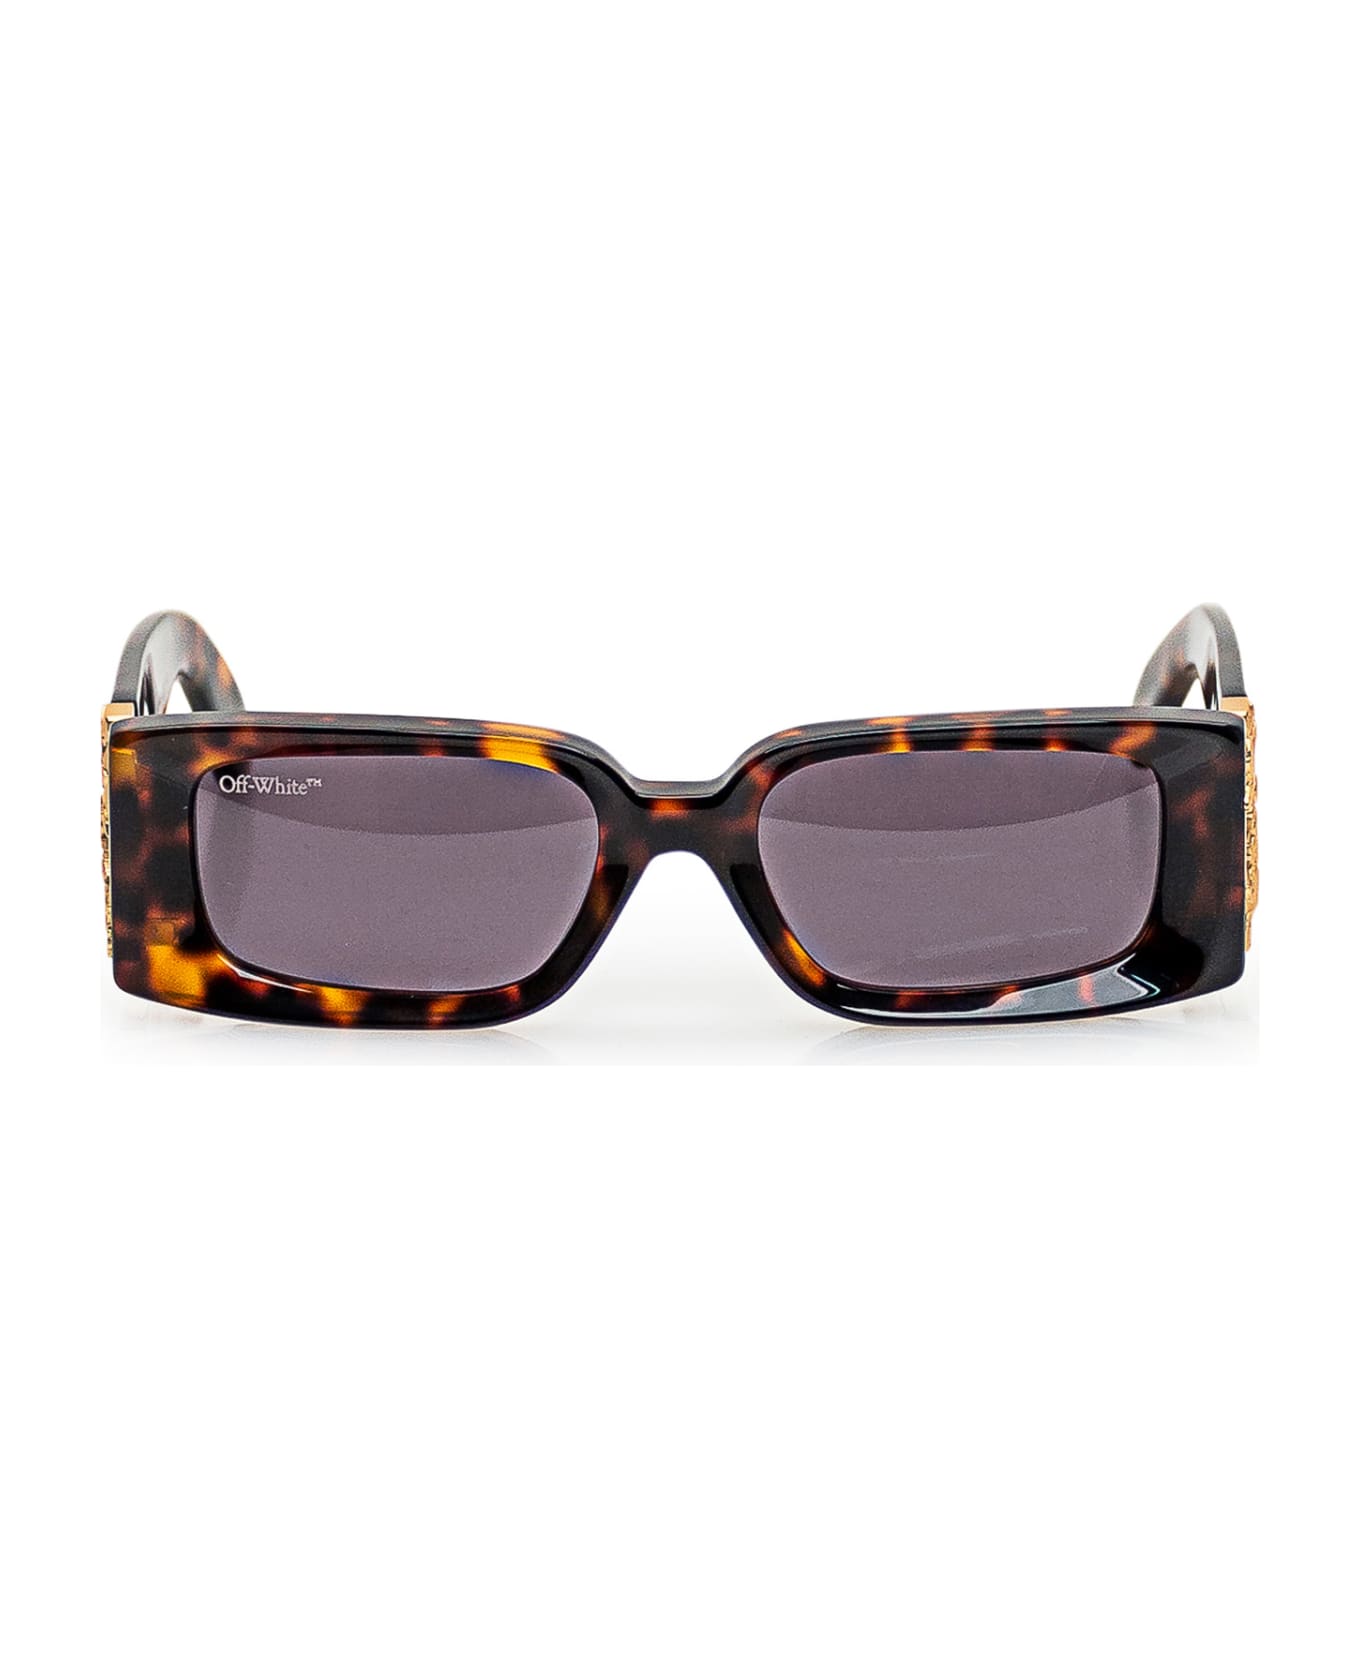 Off-White Roma Sunglasses - 6007 HAVANA